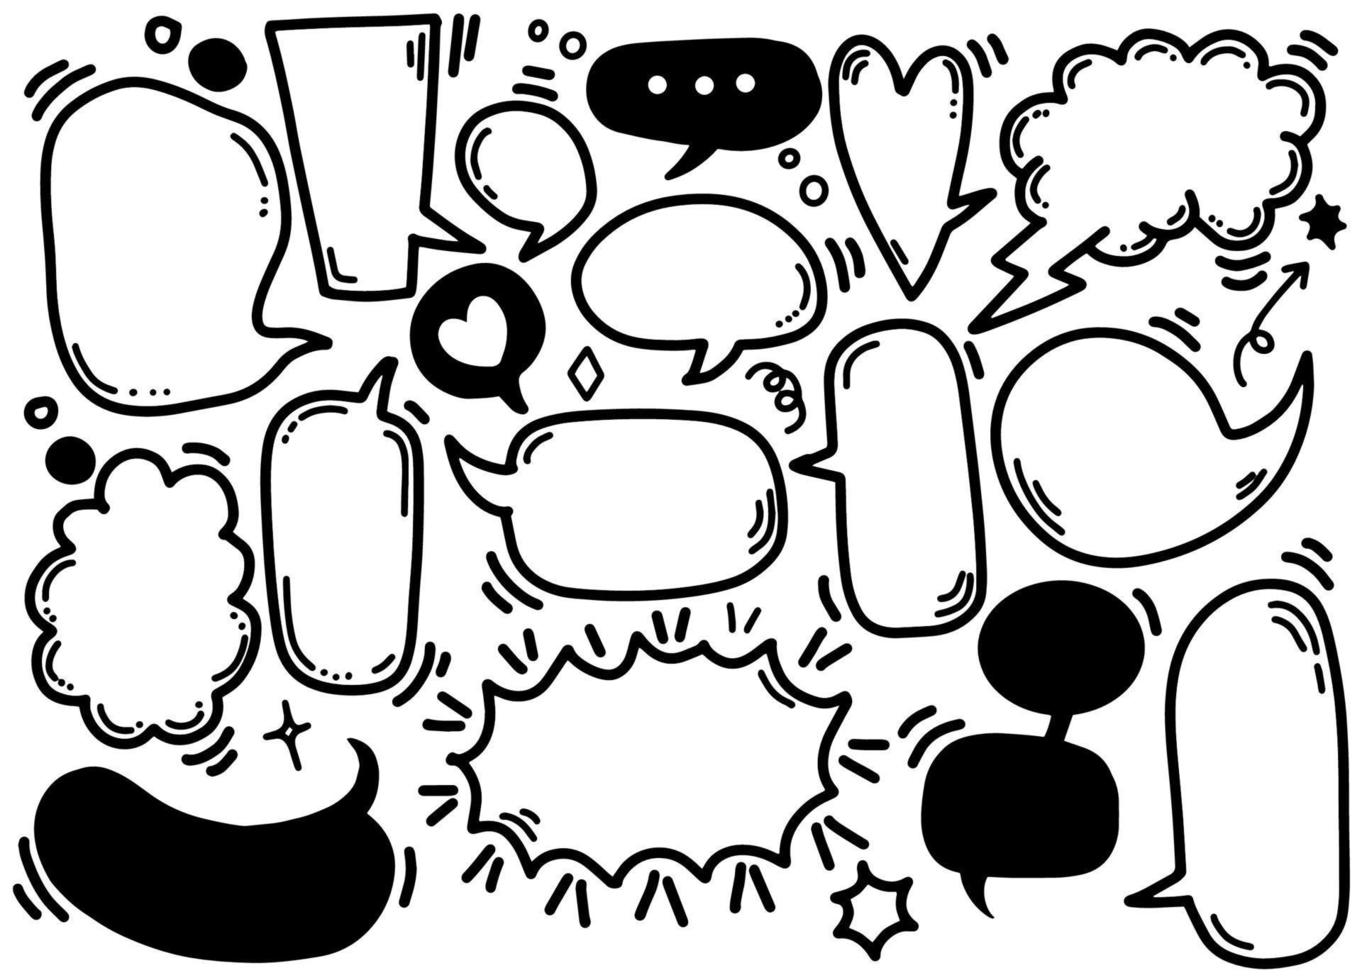 Hand drawn set of different speech bubbles,Stickers of speech bubbles vector set , Retro Set of Comics Speech and Bubbles Cartoon Vector